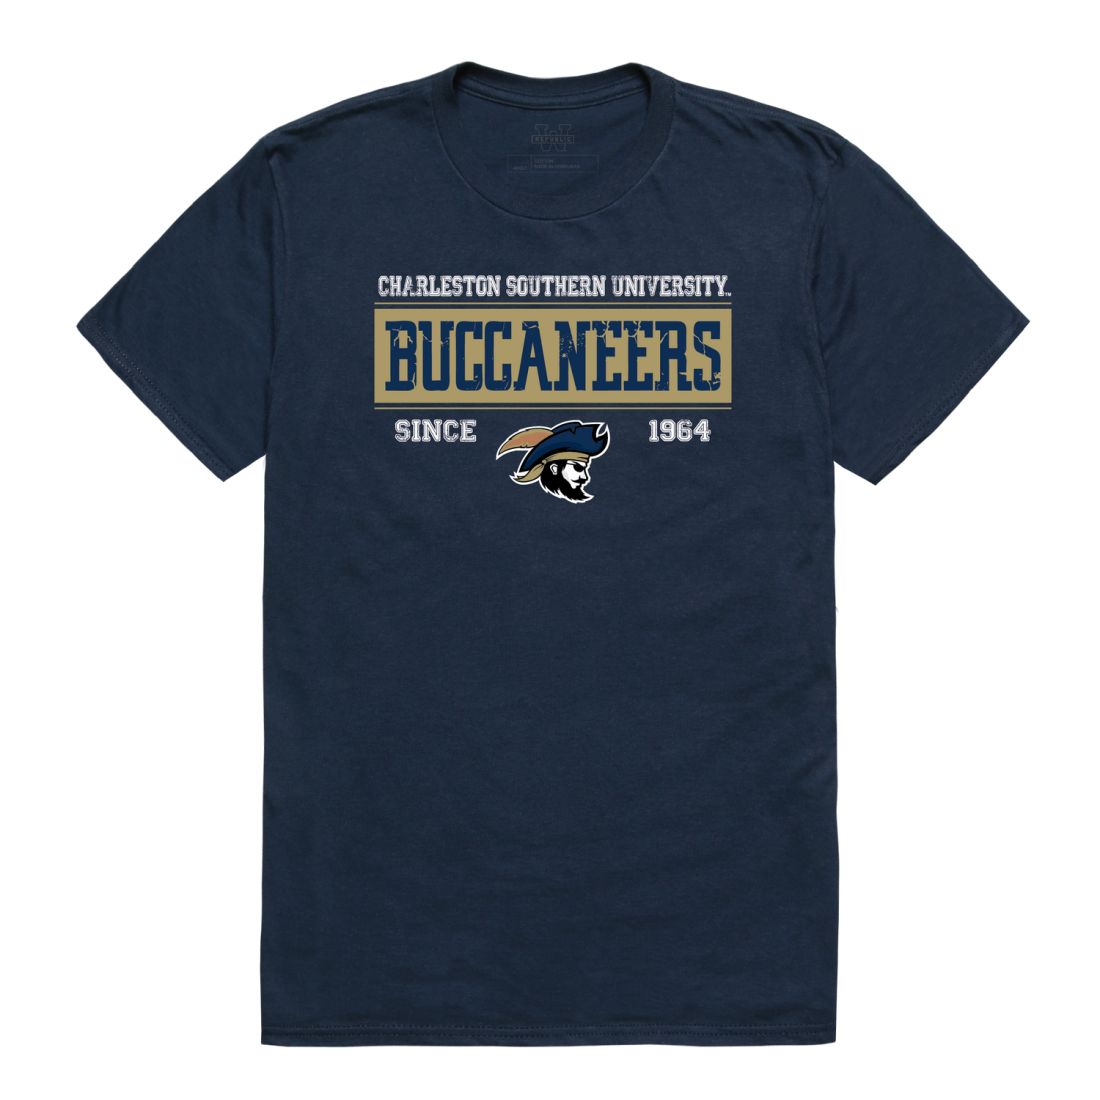 Charleston Southern University Buccanneers Established T-Shirt